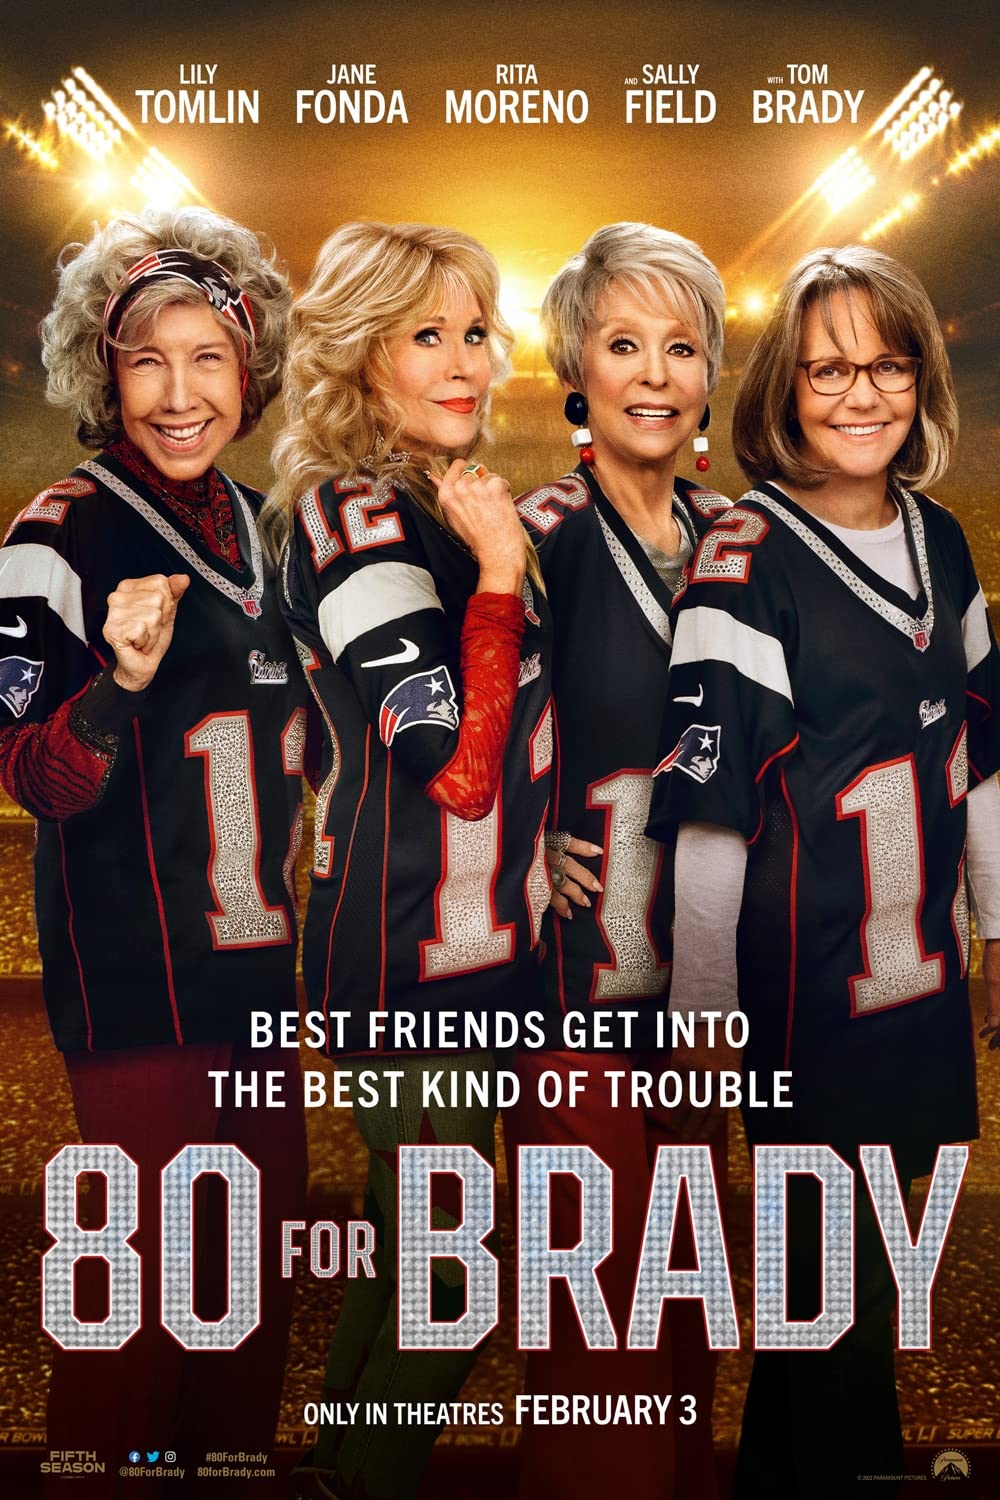 Cover Art for "80 for Brady"